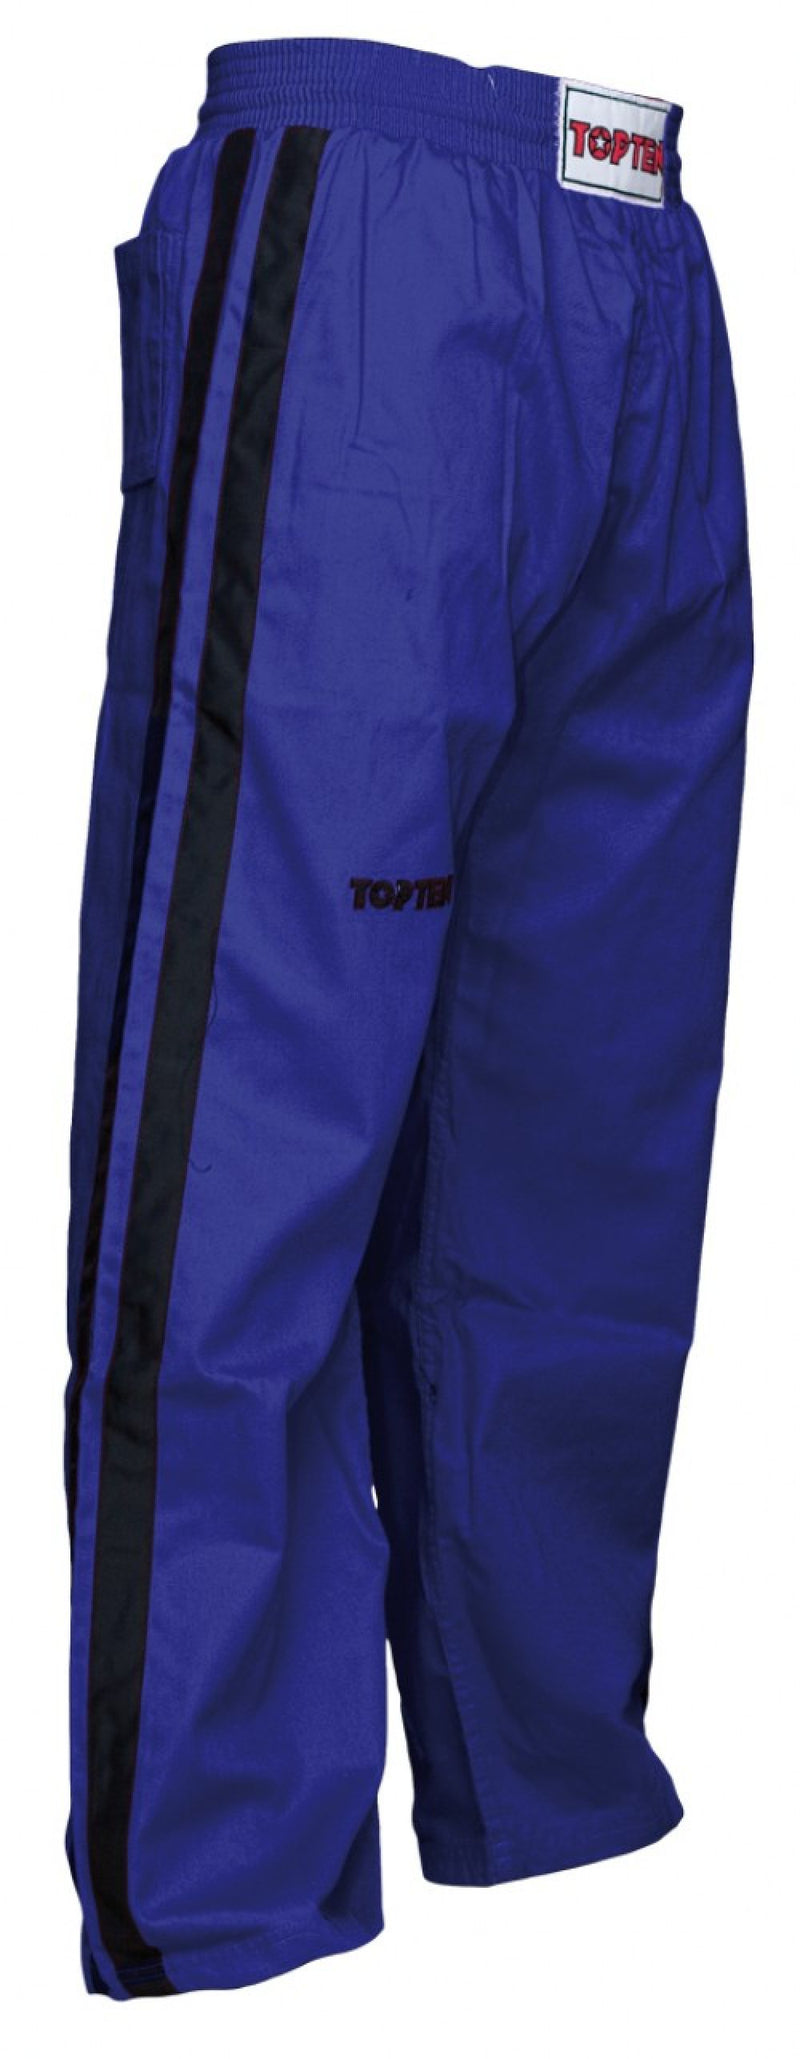 TOP TEN Polycotton Pants - blue/black, 501Blue